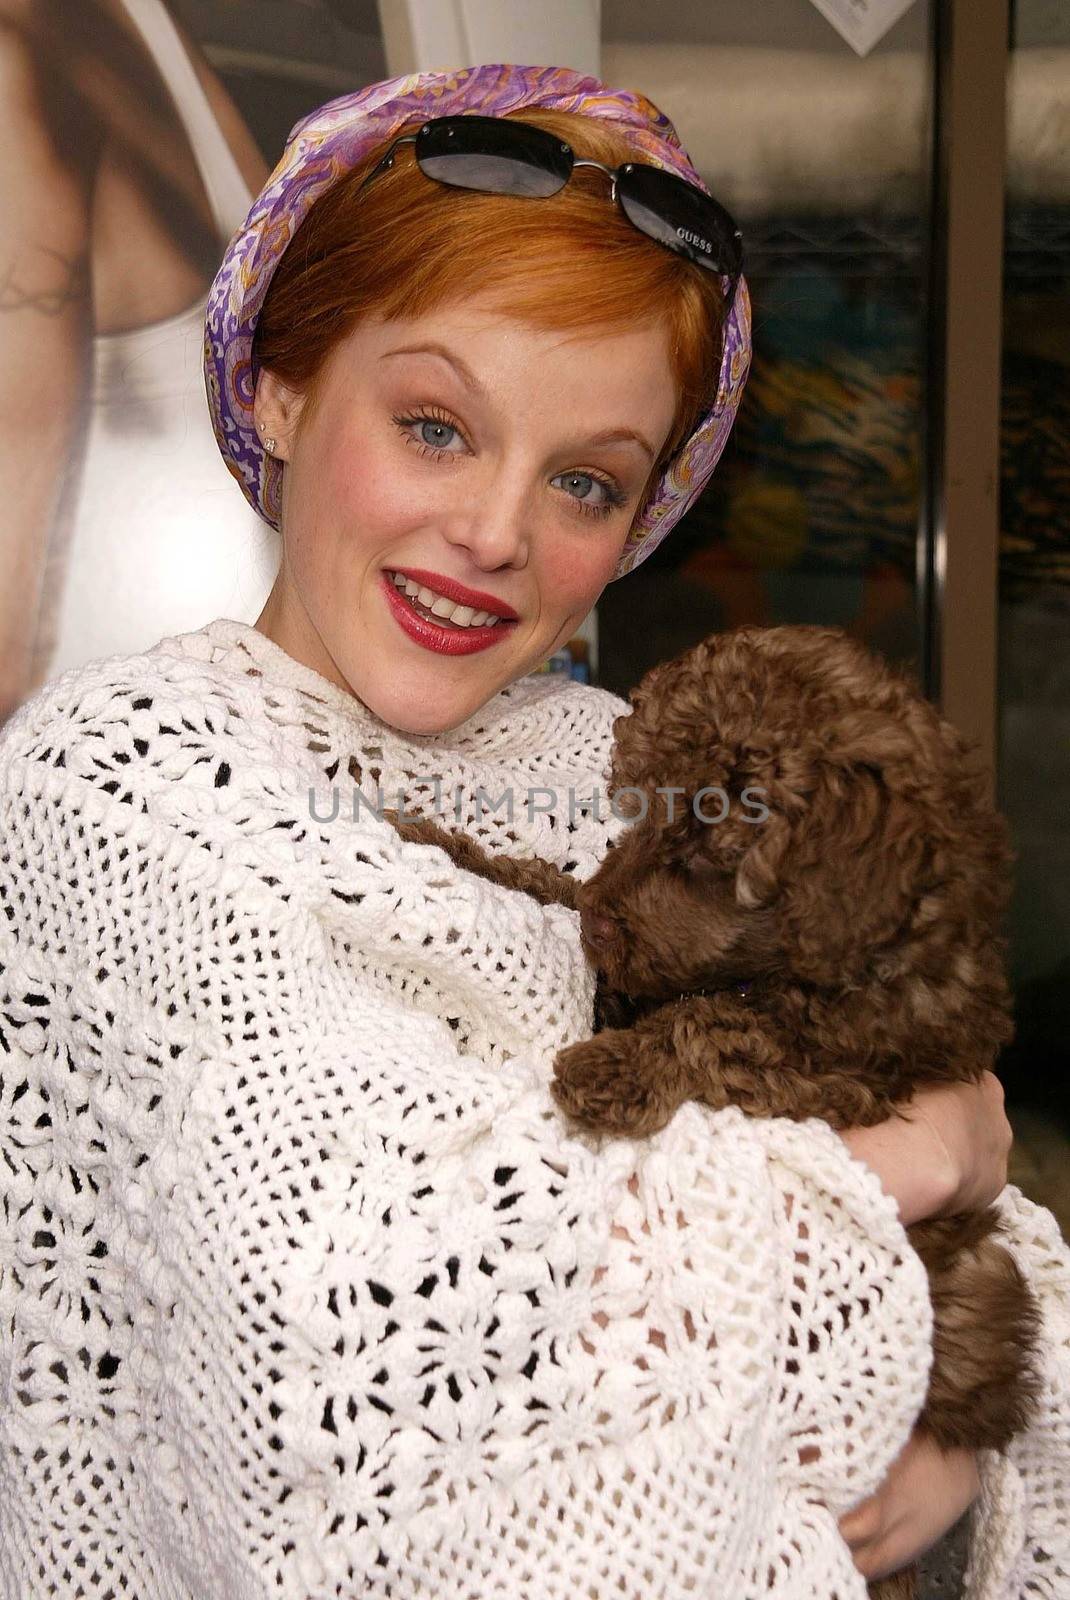 Dana Daurey at the launch of Last Chance for Animals' "Pets & Celebrities" at Pet Mania, Burbank, CA 11-15-03